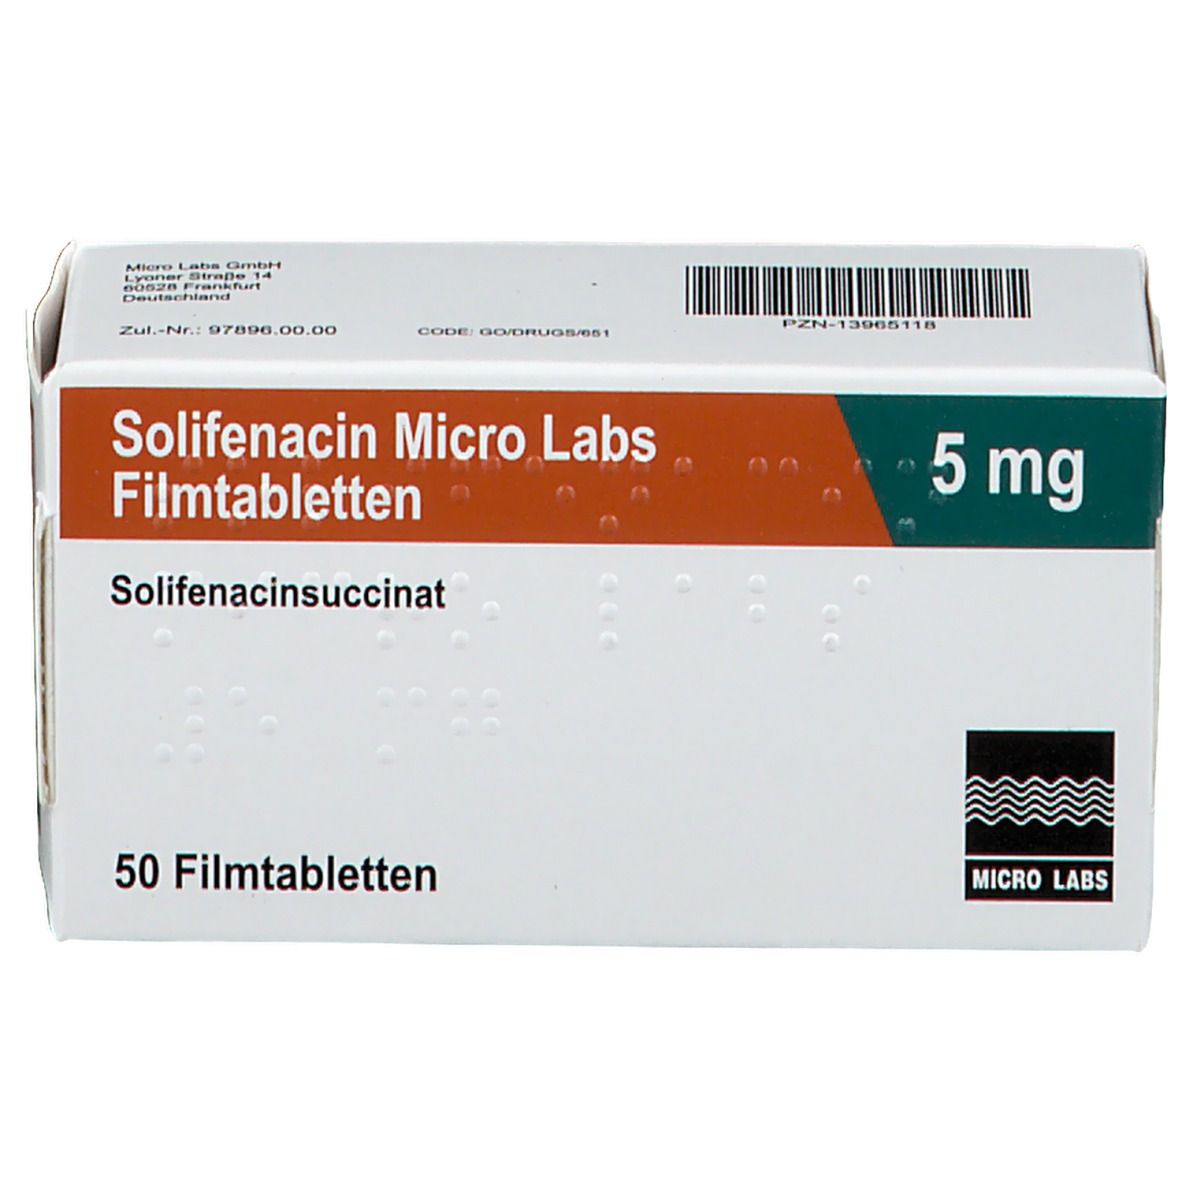 Solifenacin Micro Labs 5 mg